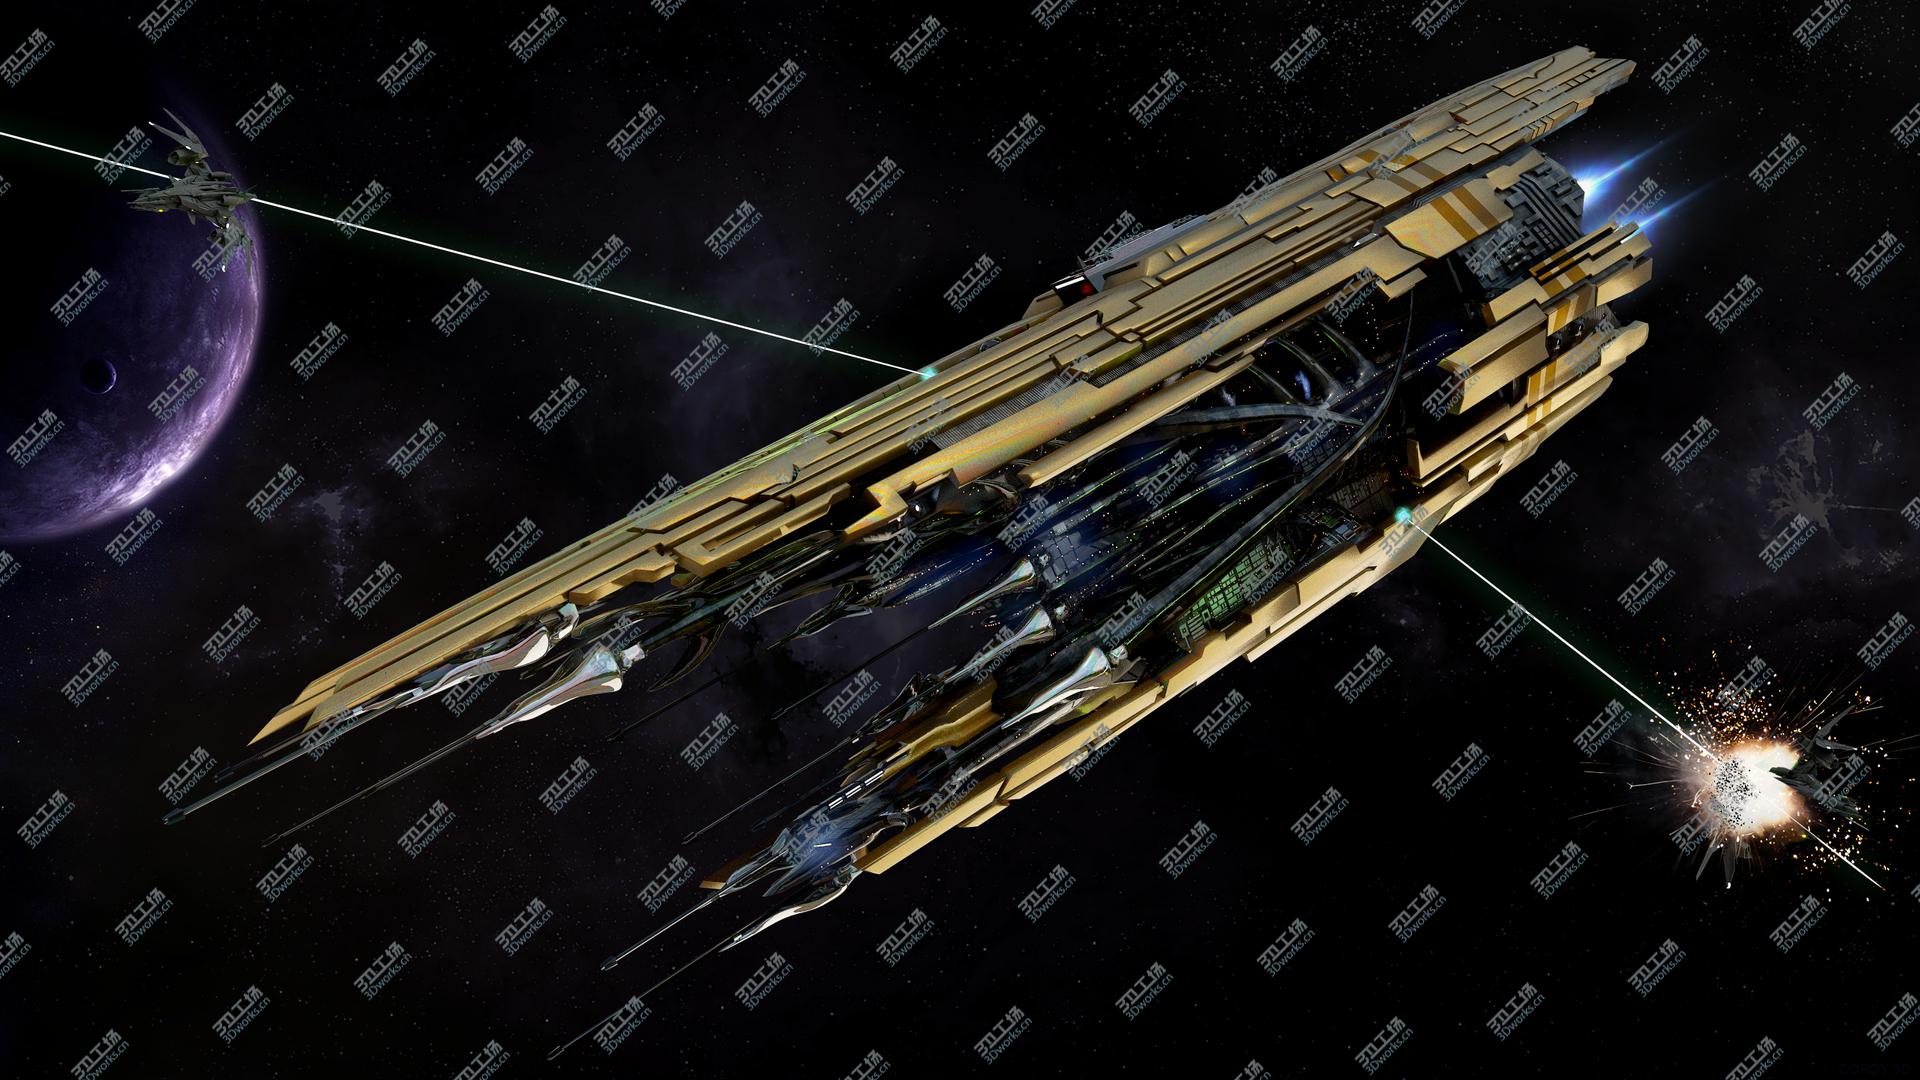 images/goods_img/2021040233/Alien Dreadnought Capital Sci-Fi Spaceship model/1.jpg